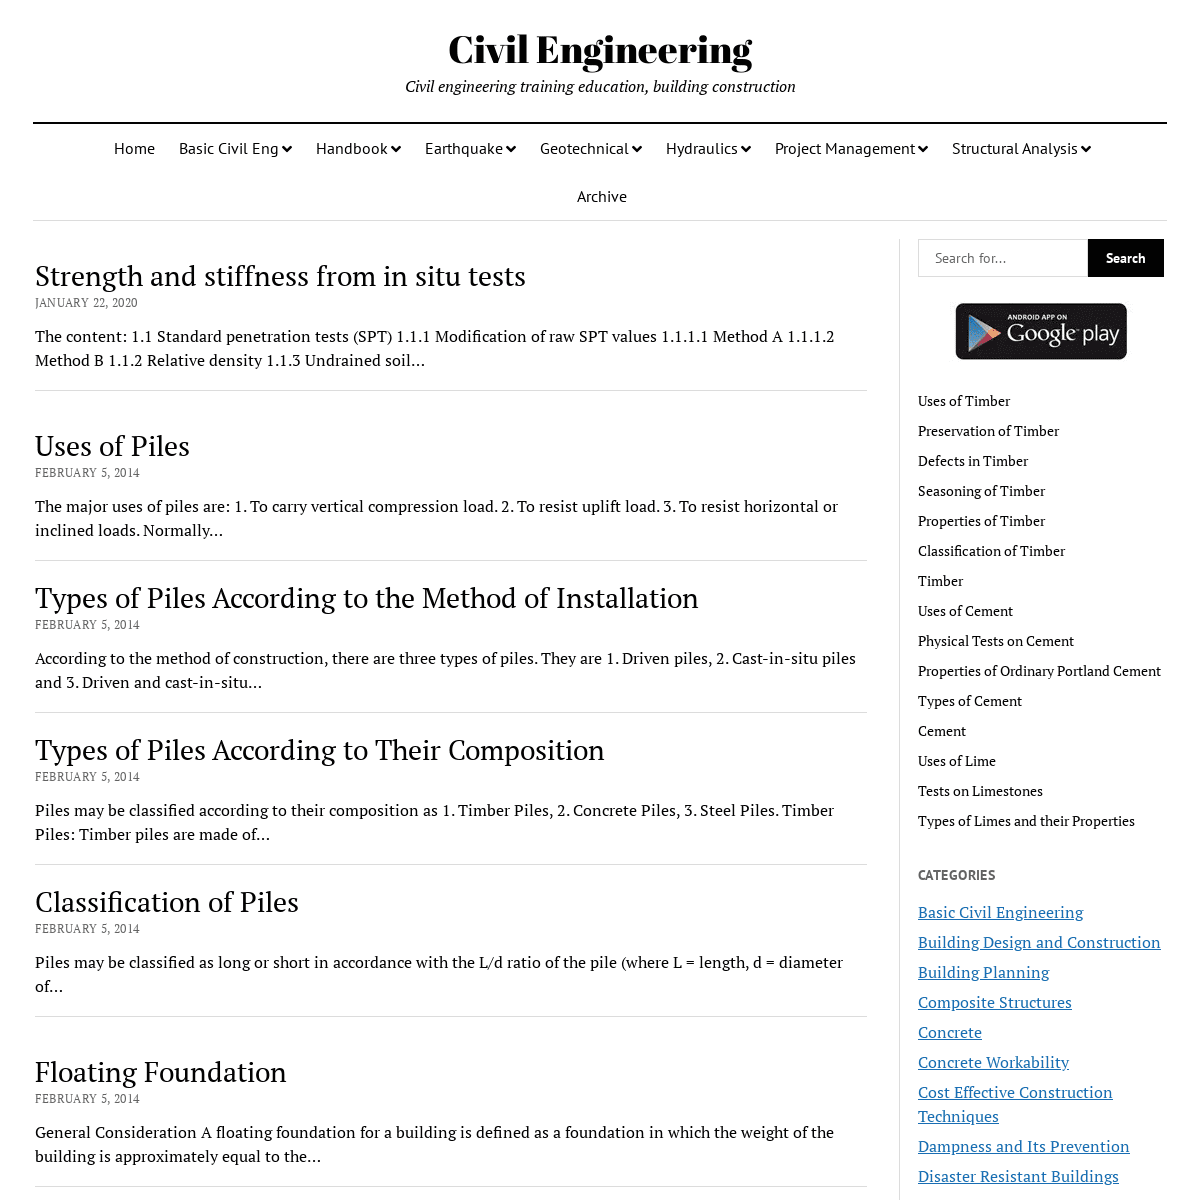 A complete backup of civilengineeringx.com